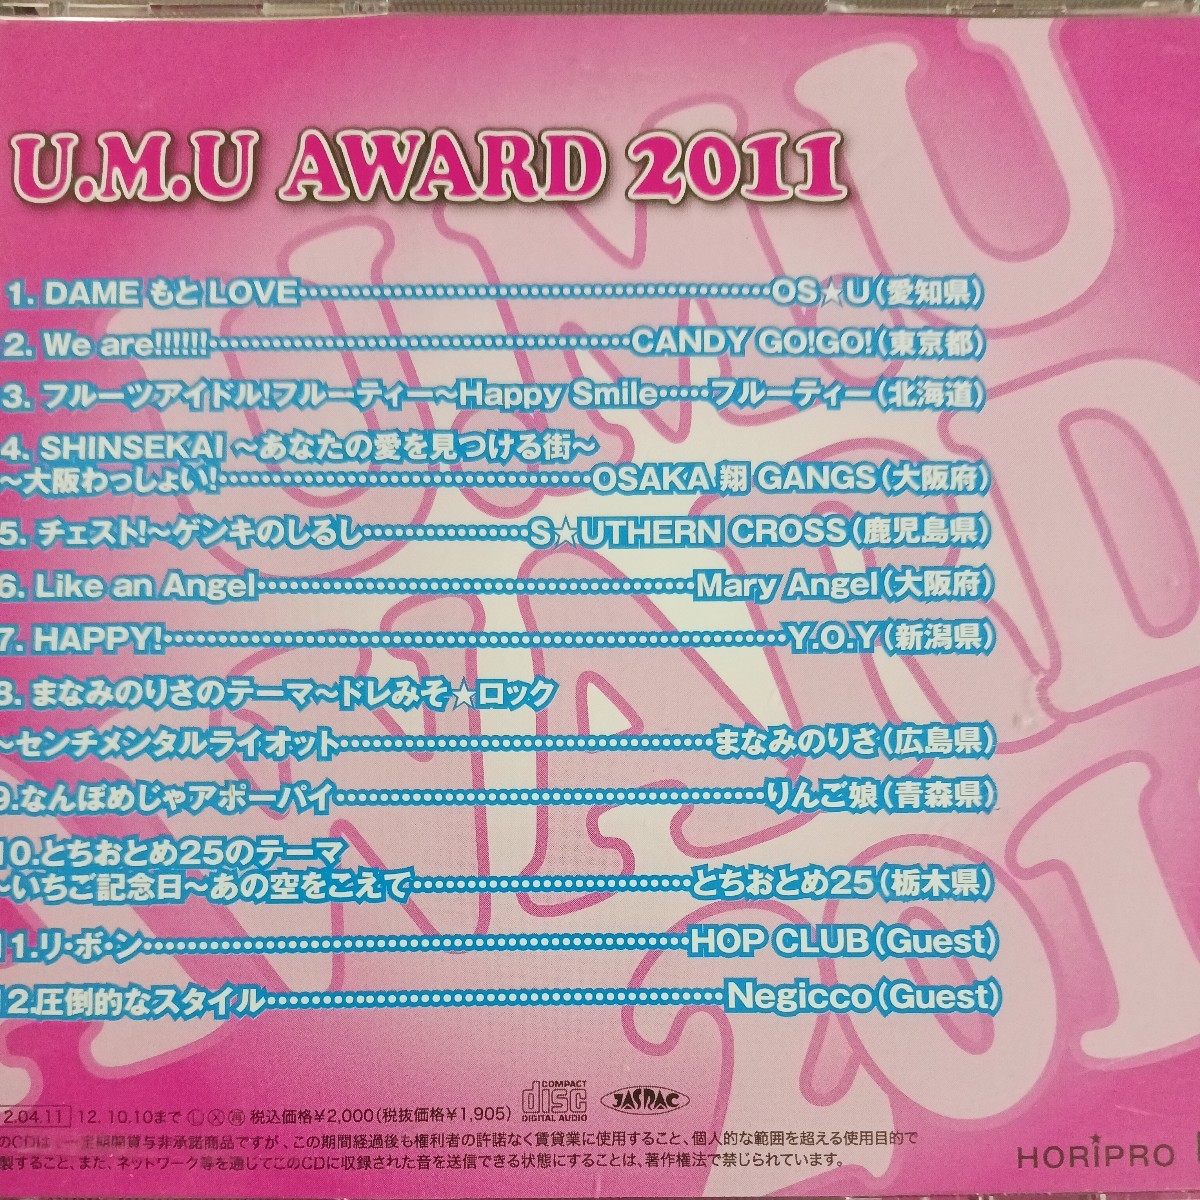 CD_24】 U.M.U AWARD 2011 地域活性アイドル大図鑑 ご当地アイドルno.1決定戦 OS☆U CANDY GO!GO! りんご娘 とちおとめ25の画像2